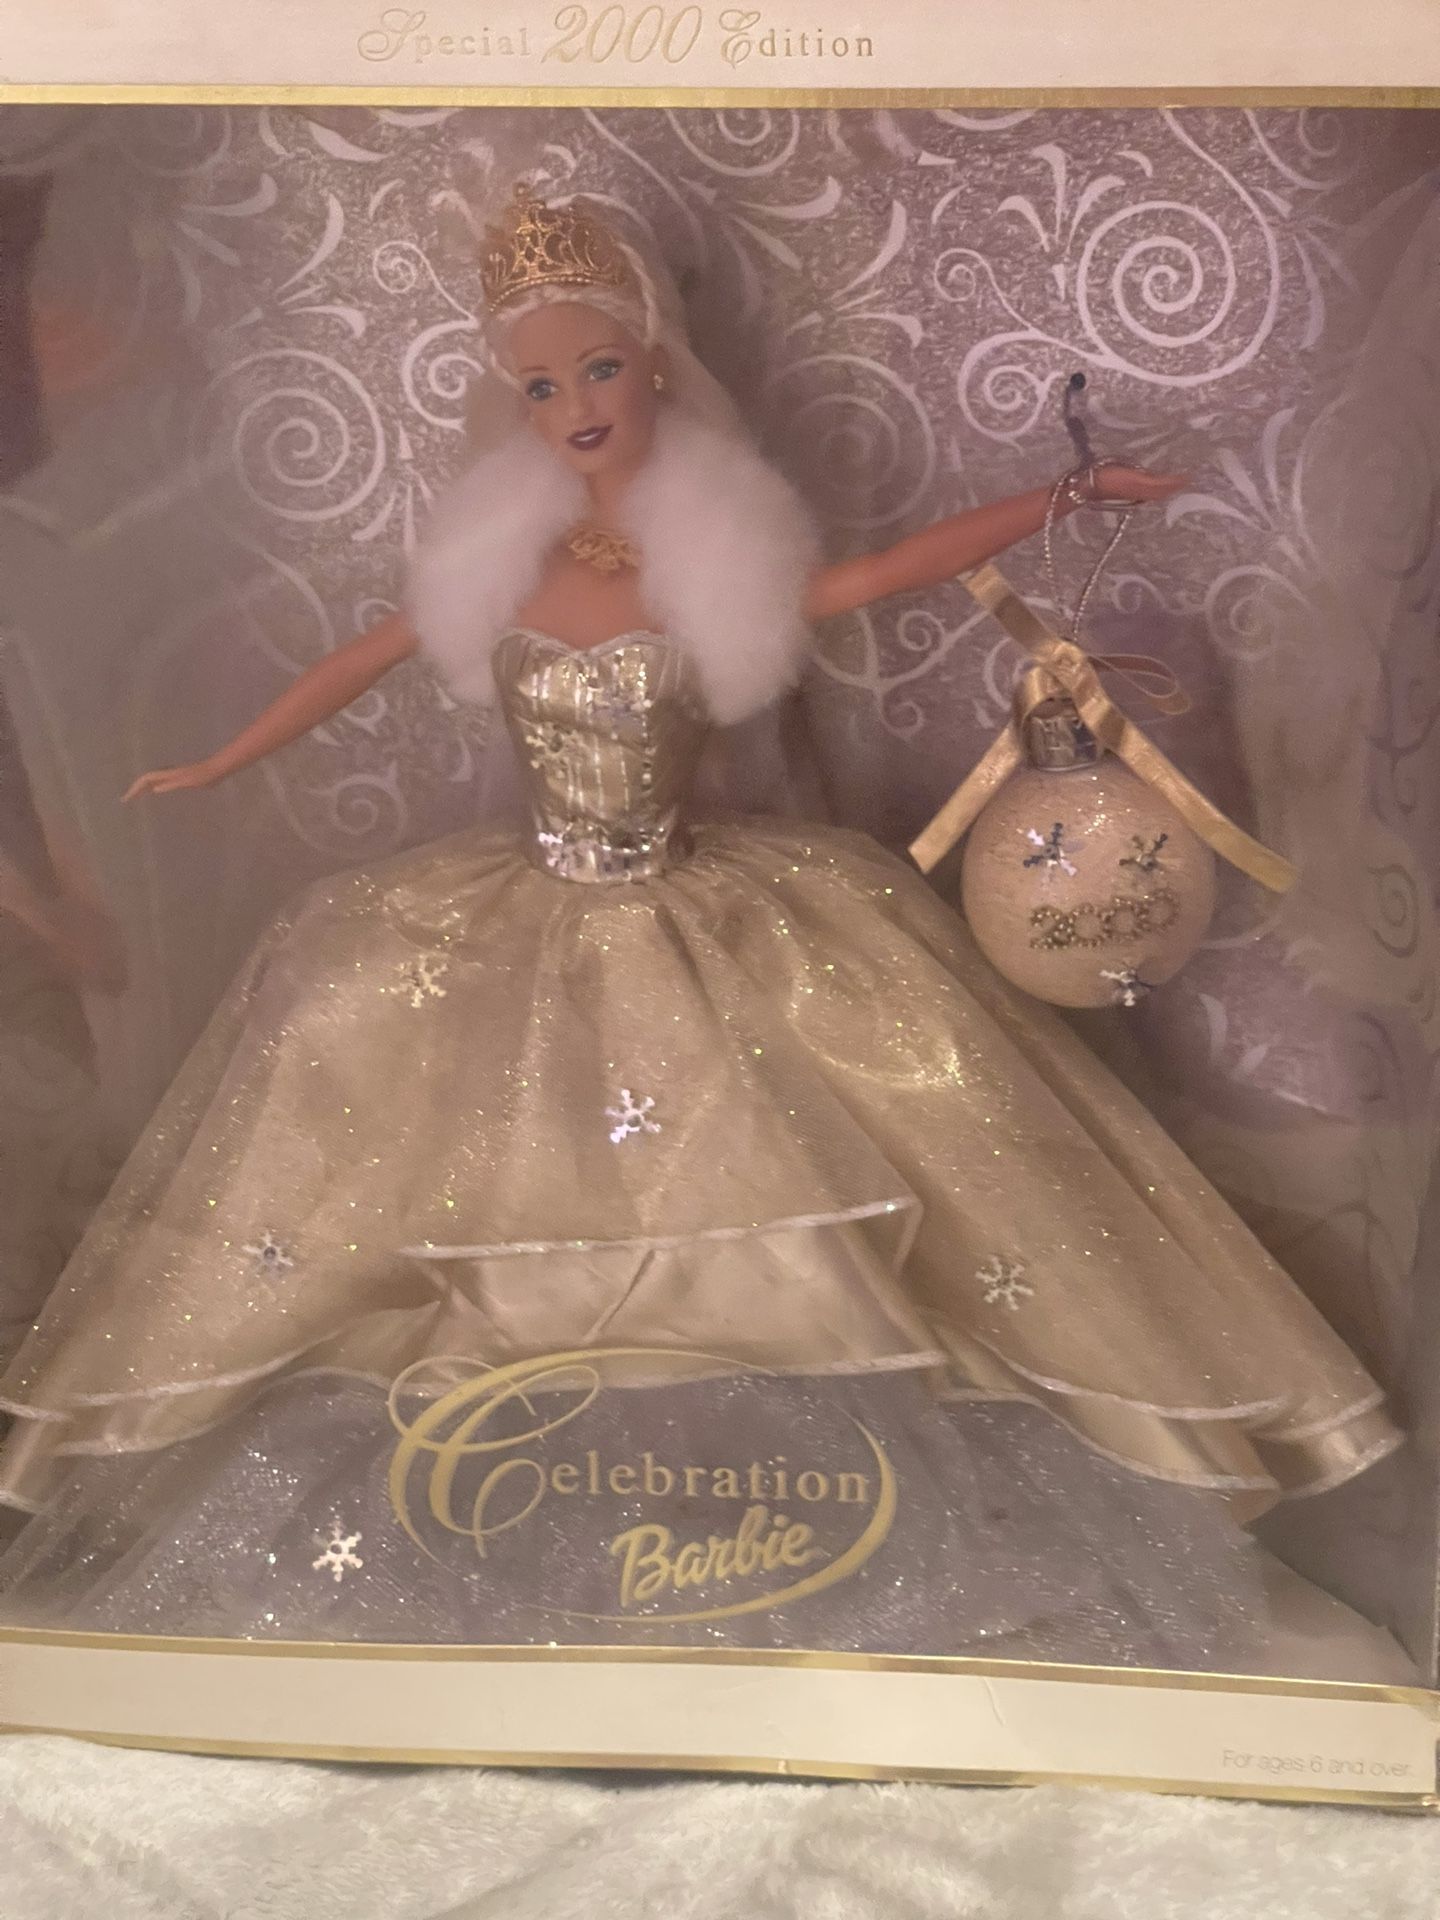 Special Edition 2000 Celebration Barbie